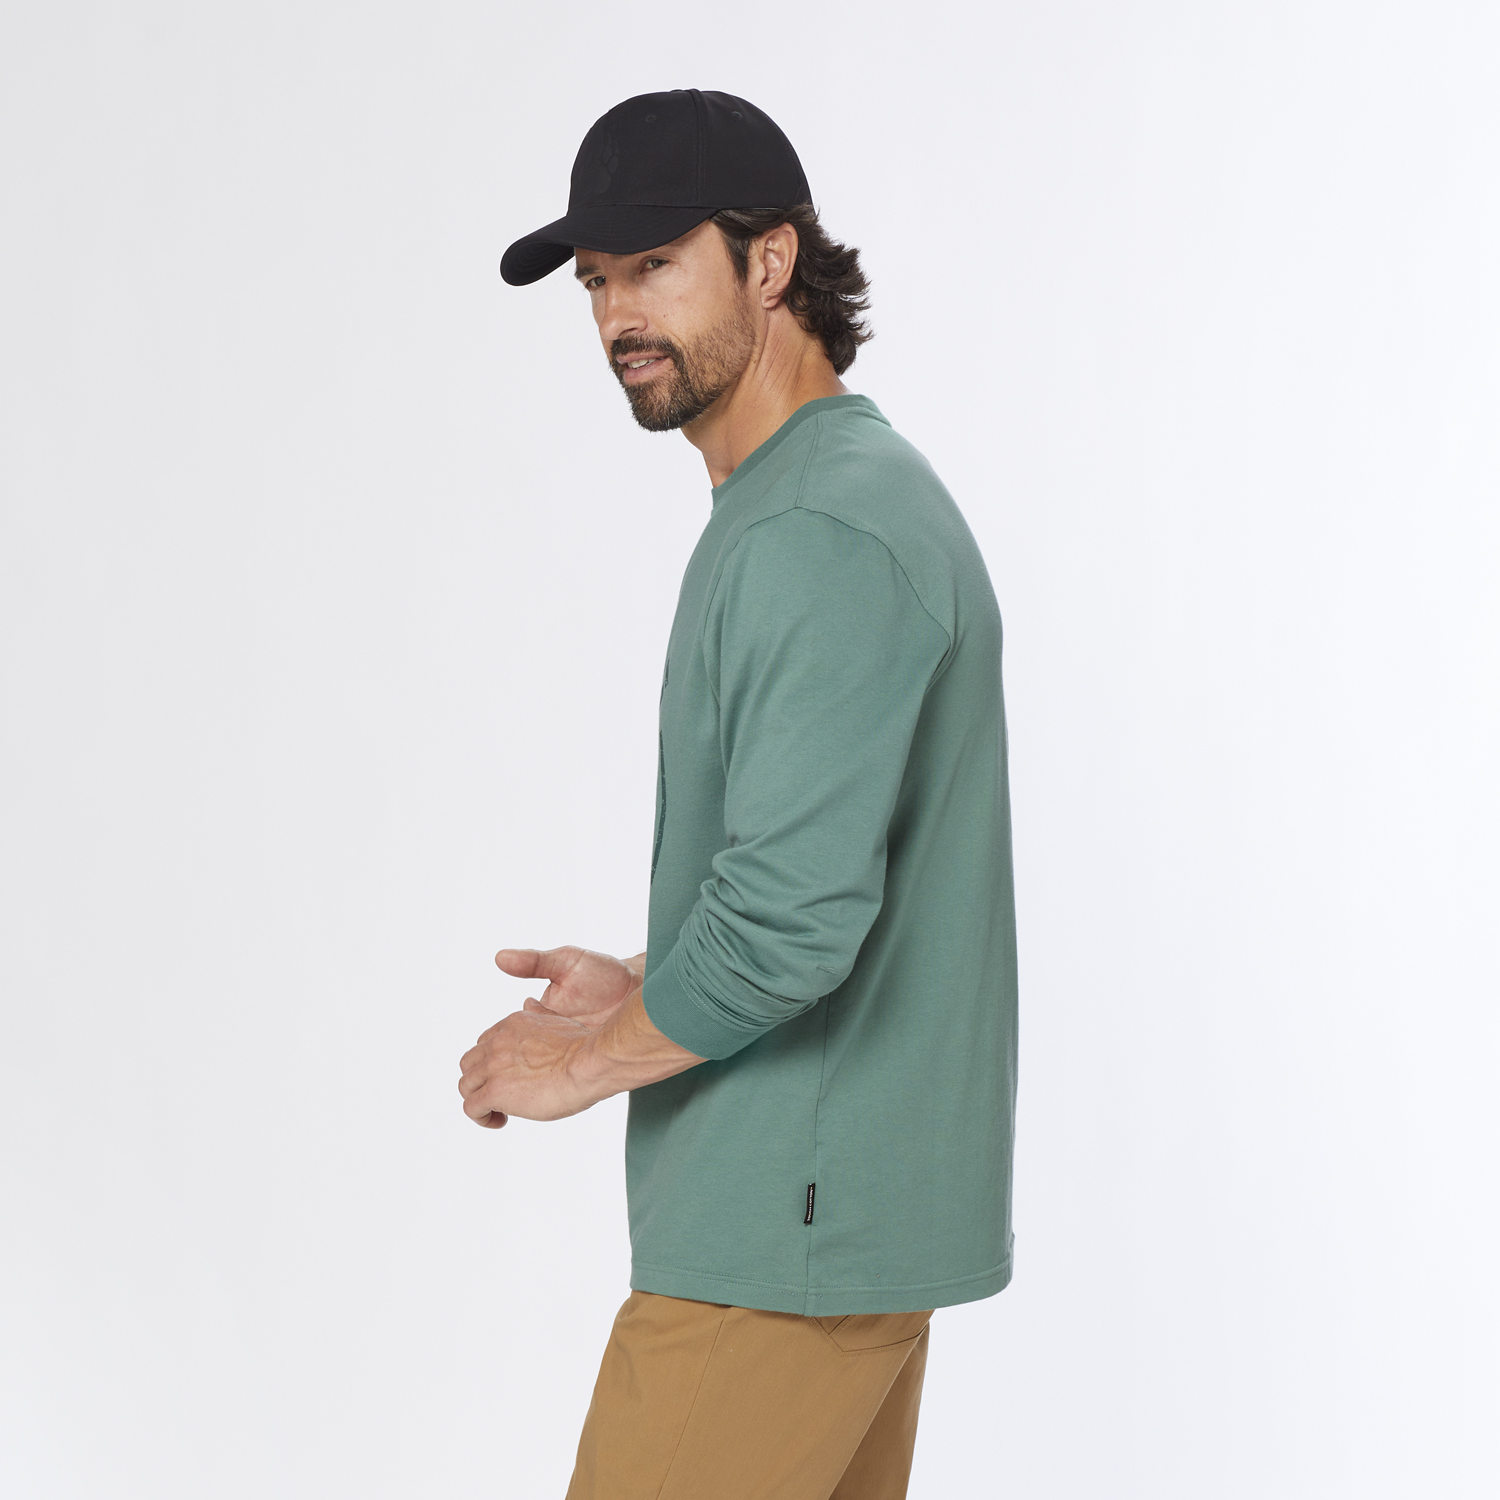 Men's AKHG Crosshaul Cotton Graphic Standard Fit Long Sleeve